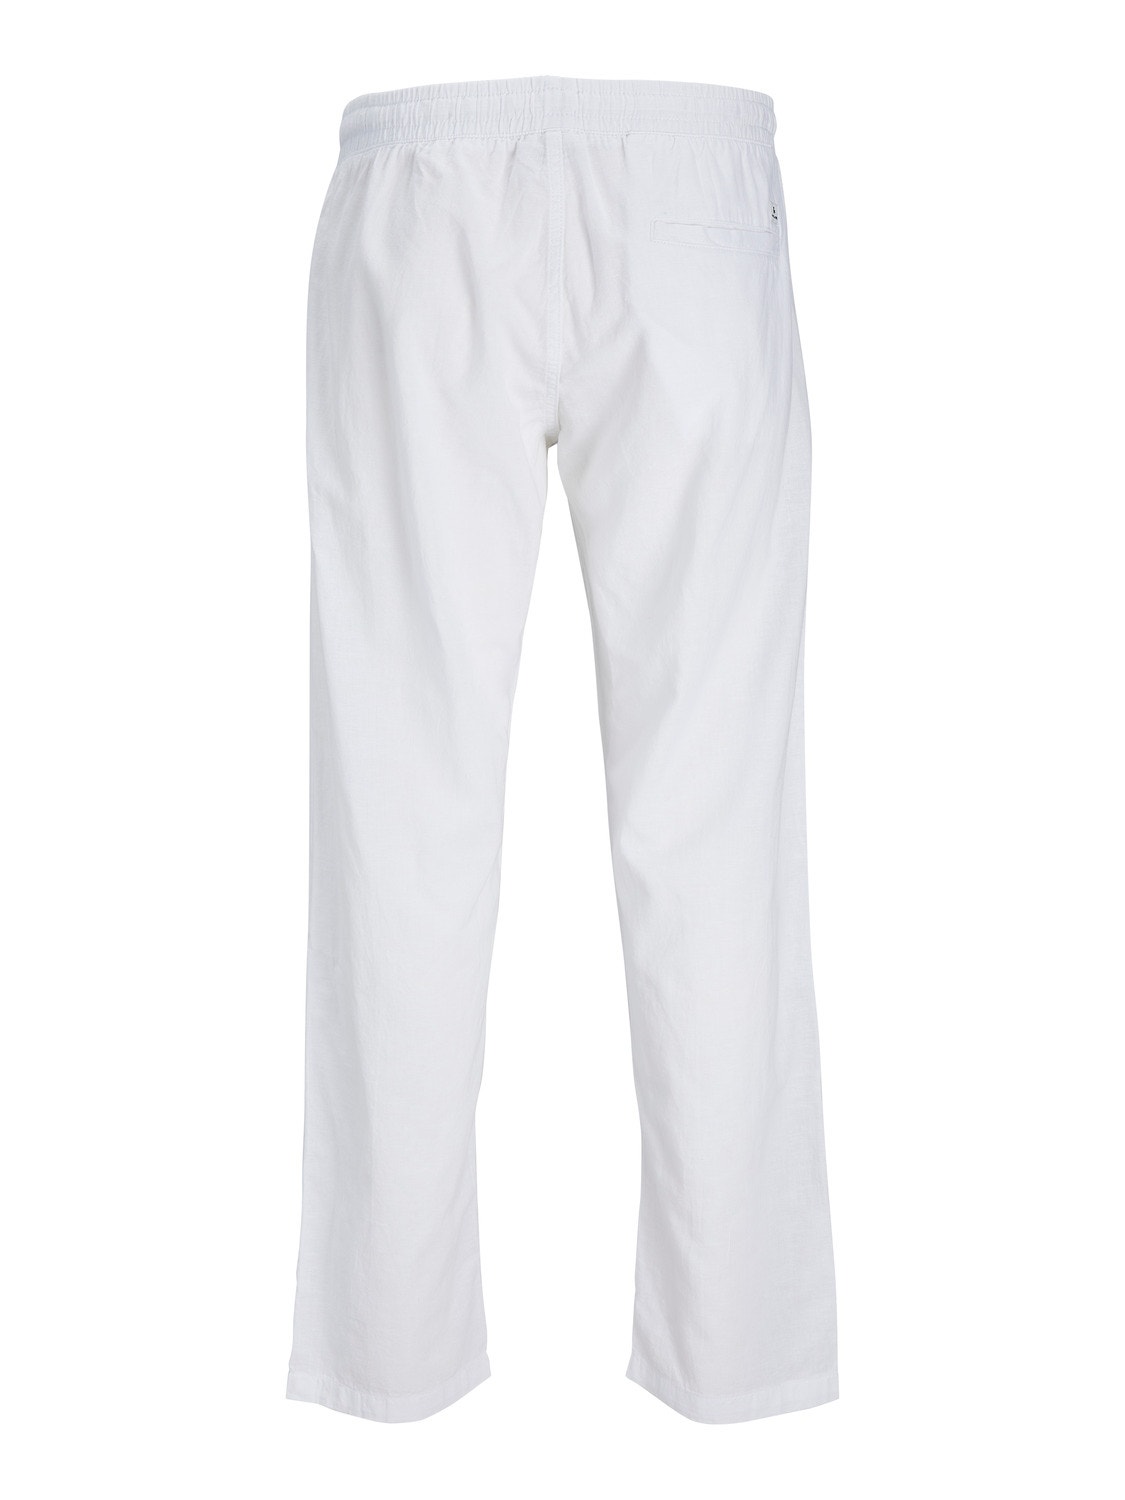 Jack & Jones Relaxed Fit Klasyczne spodnie -Bright White - 12248606